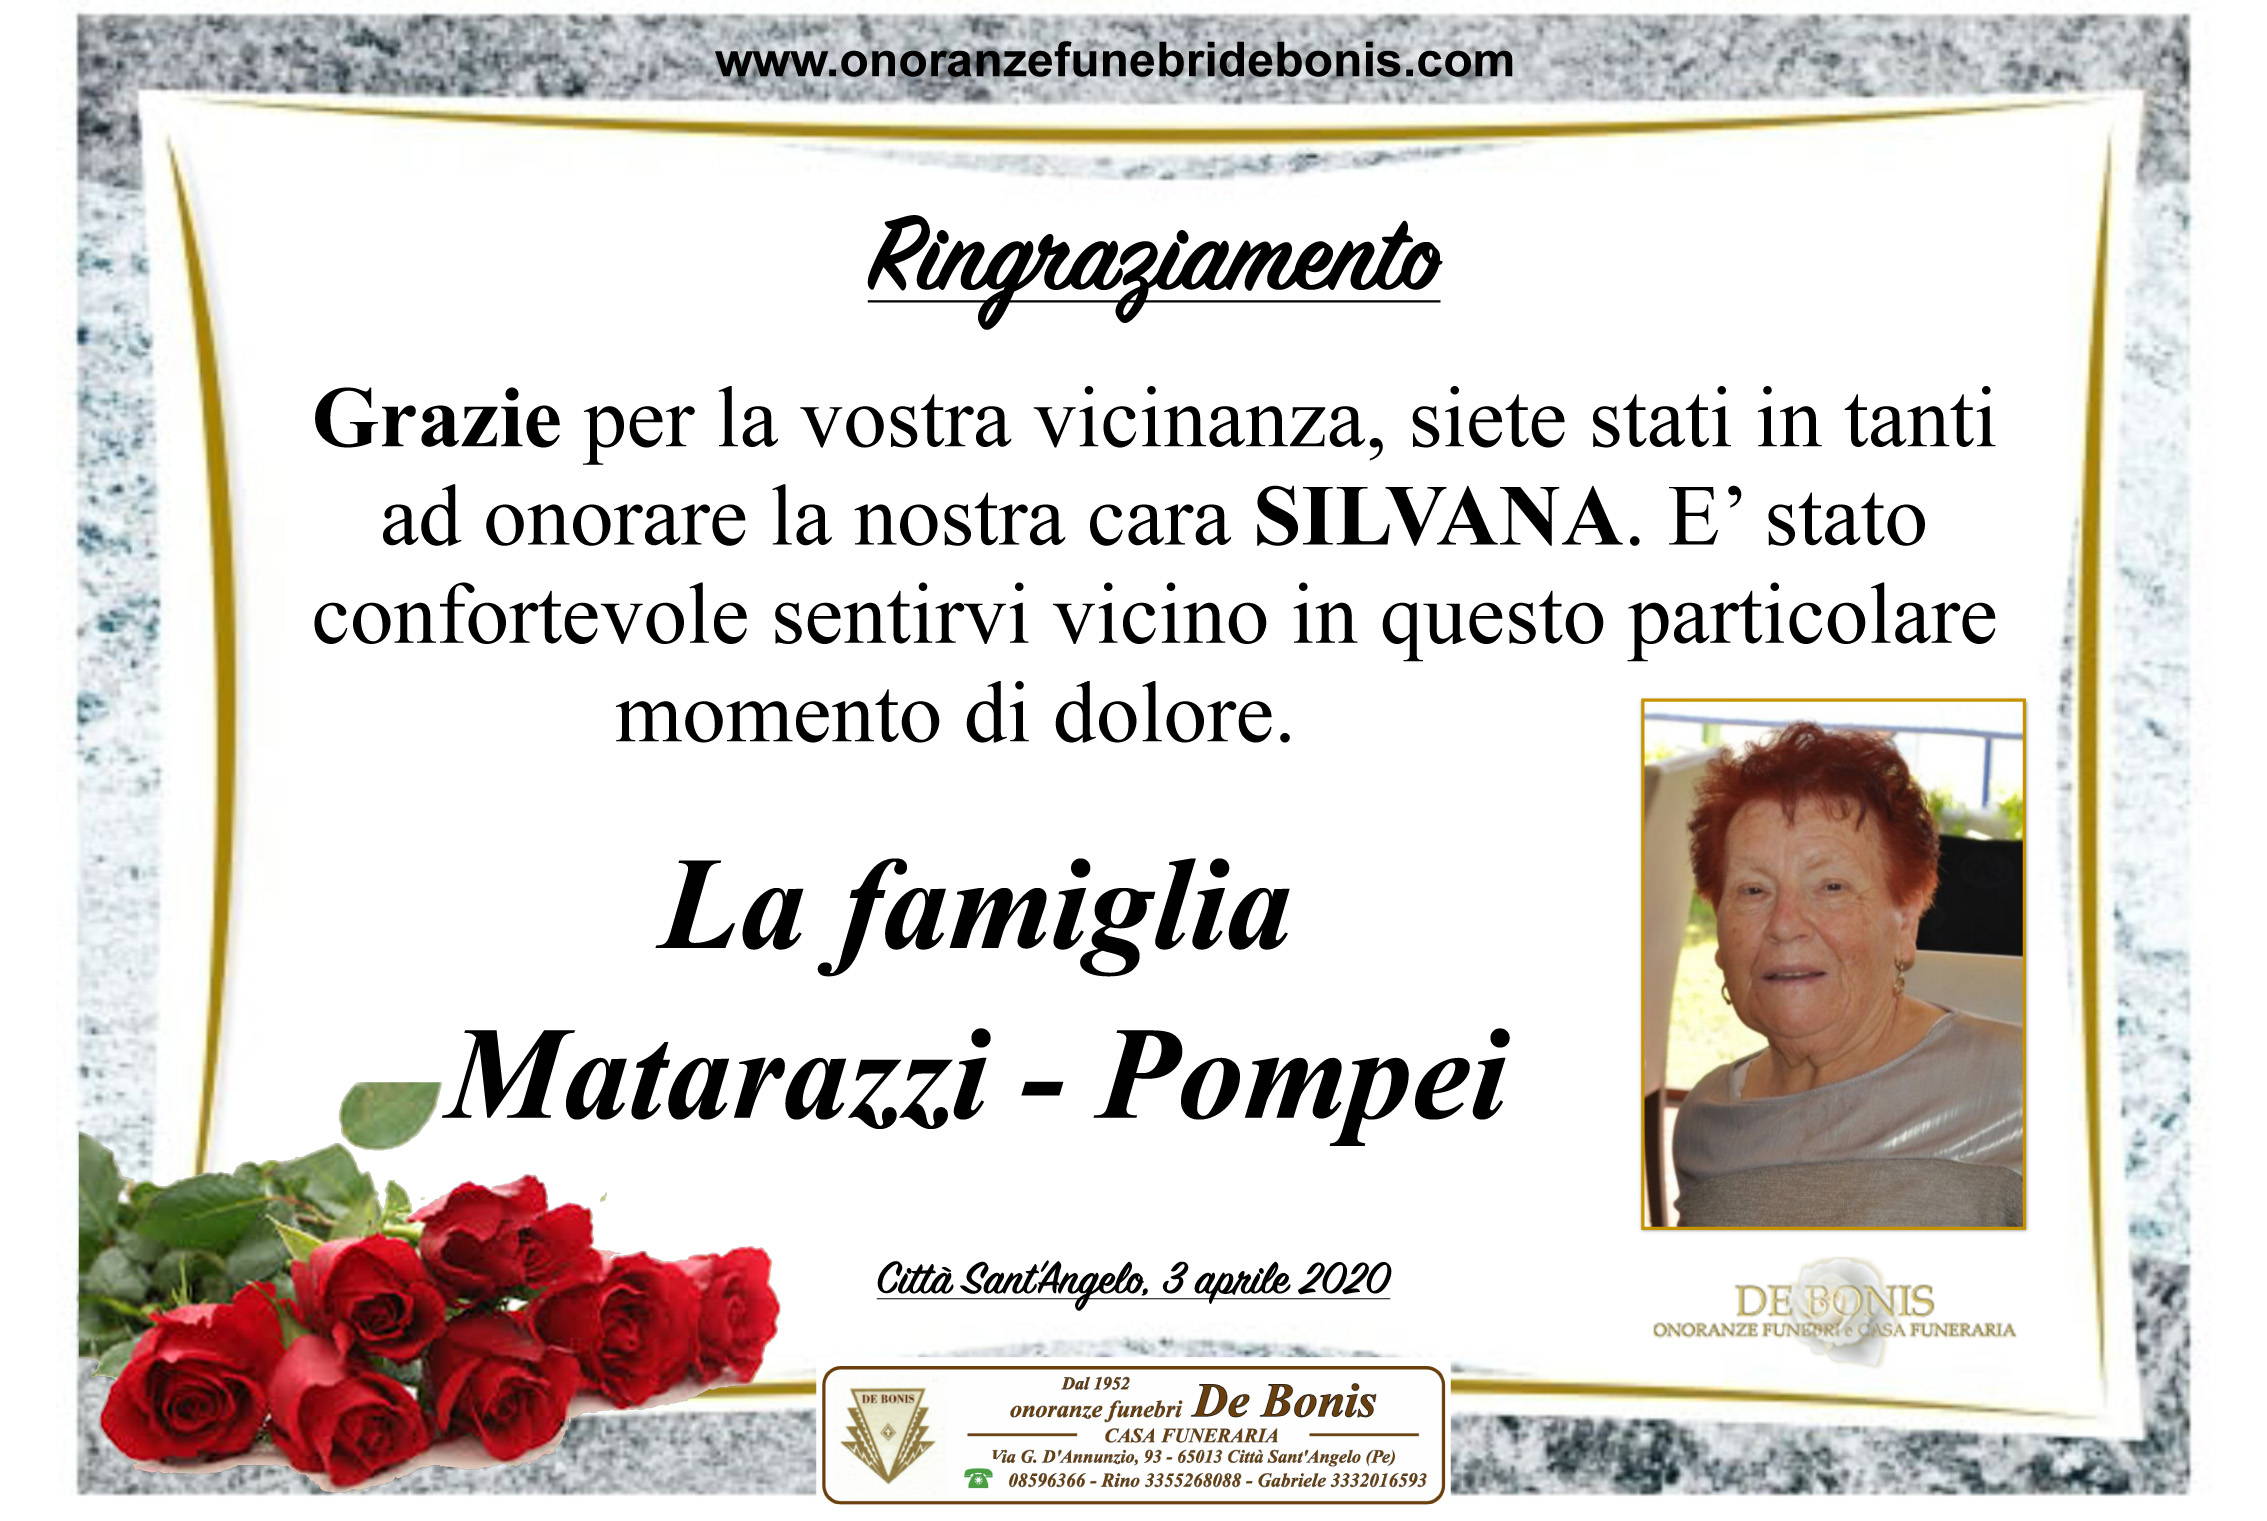 Silvana Pompei